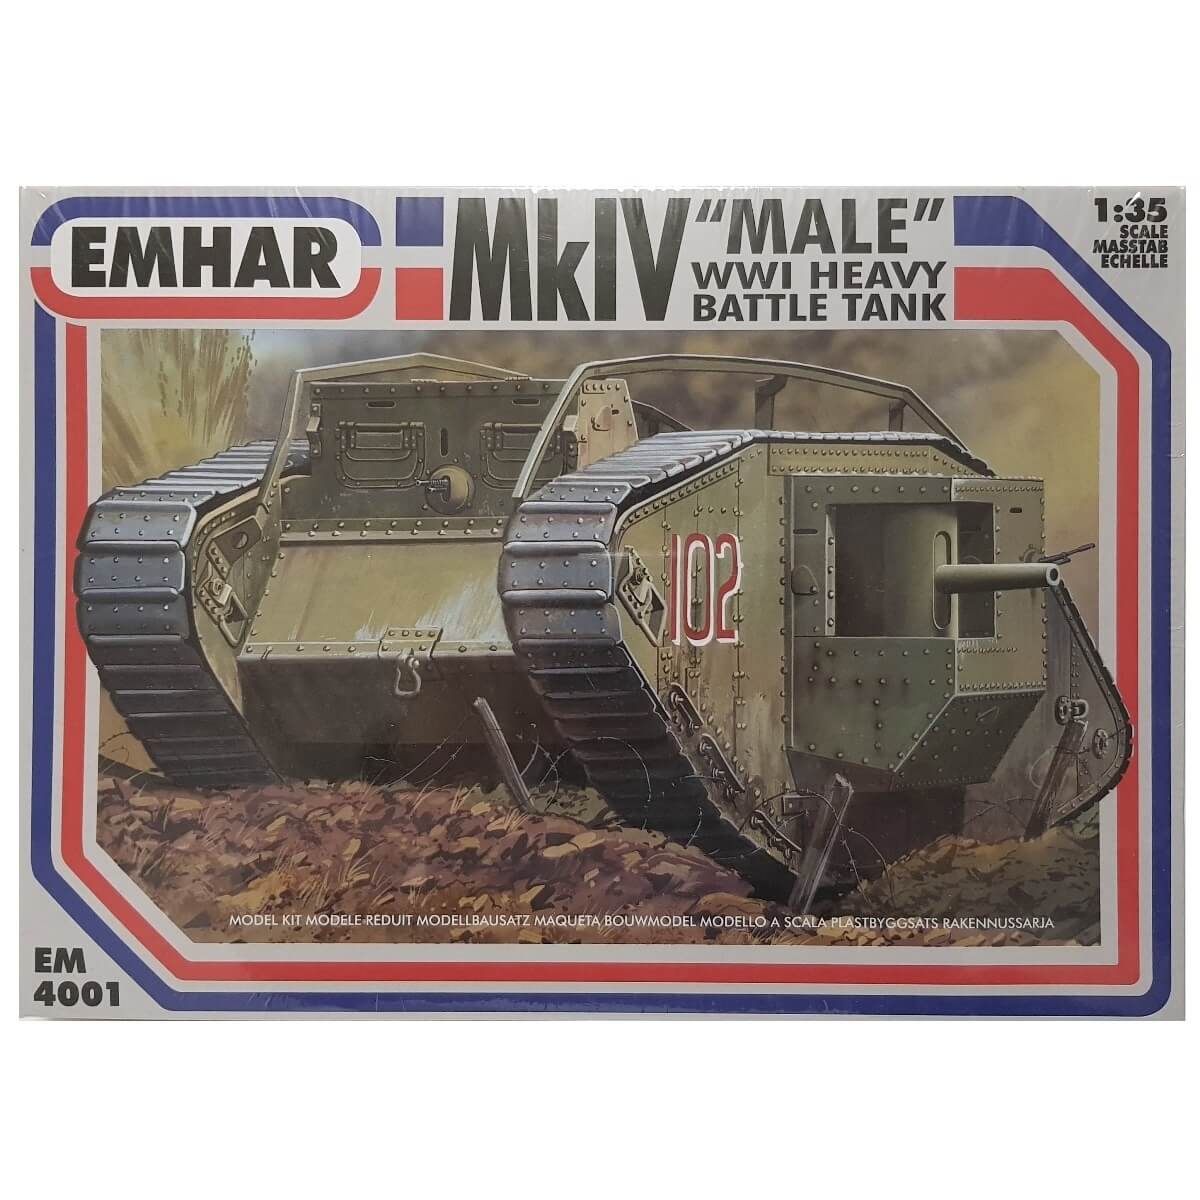 1:35 Mk. IV Male WW I Heavy Battle Tank - EMHAR